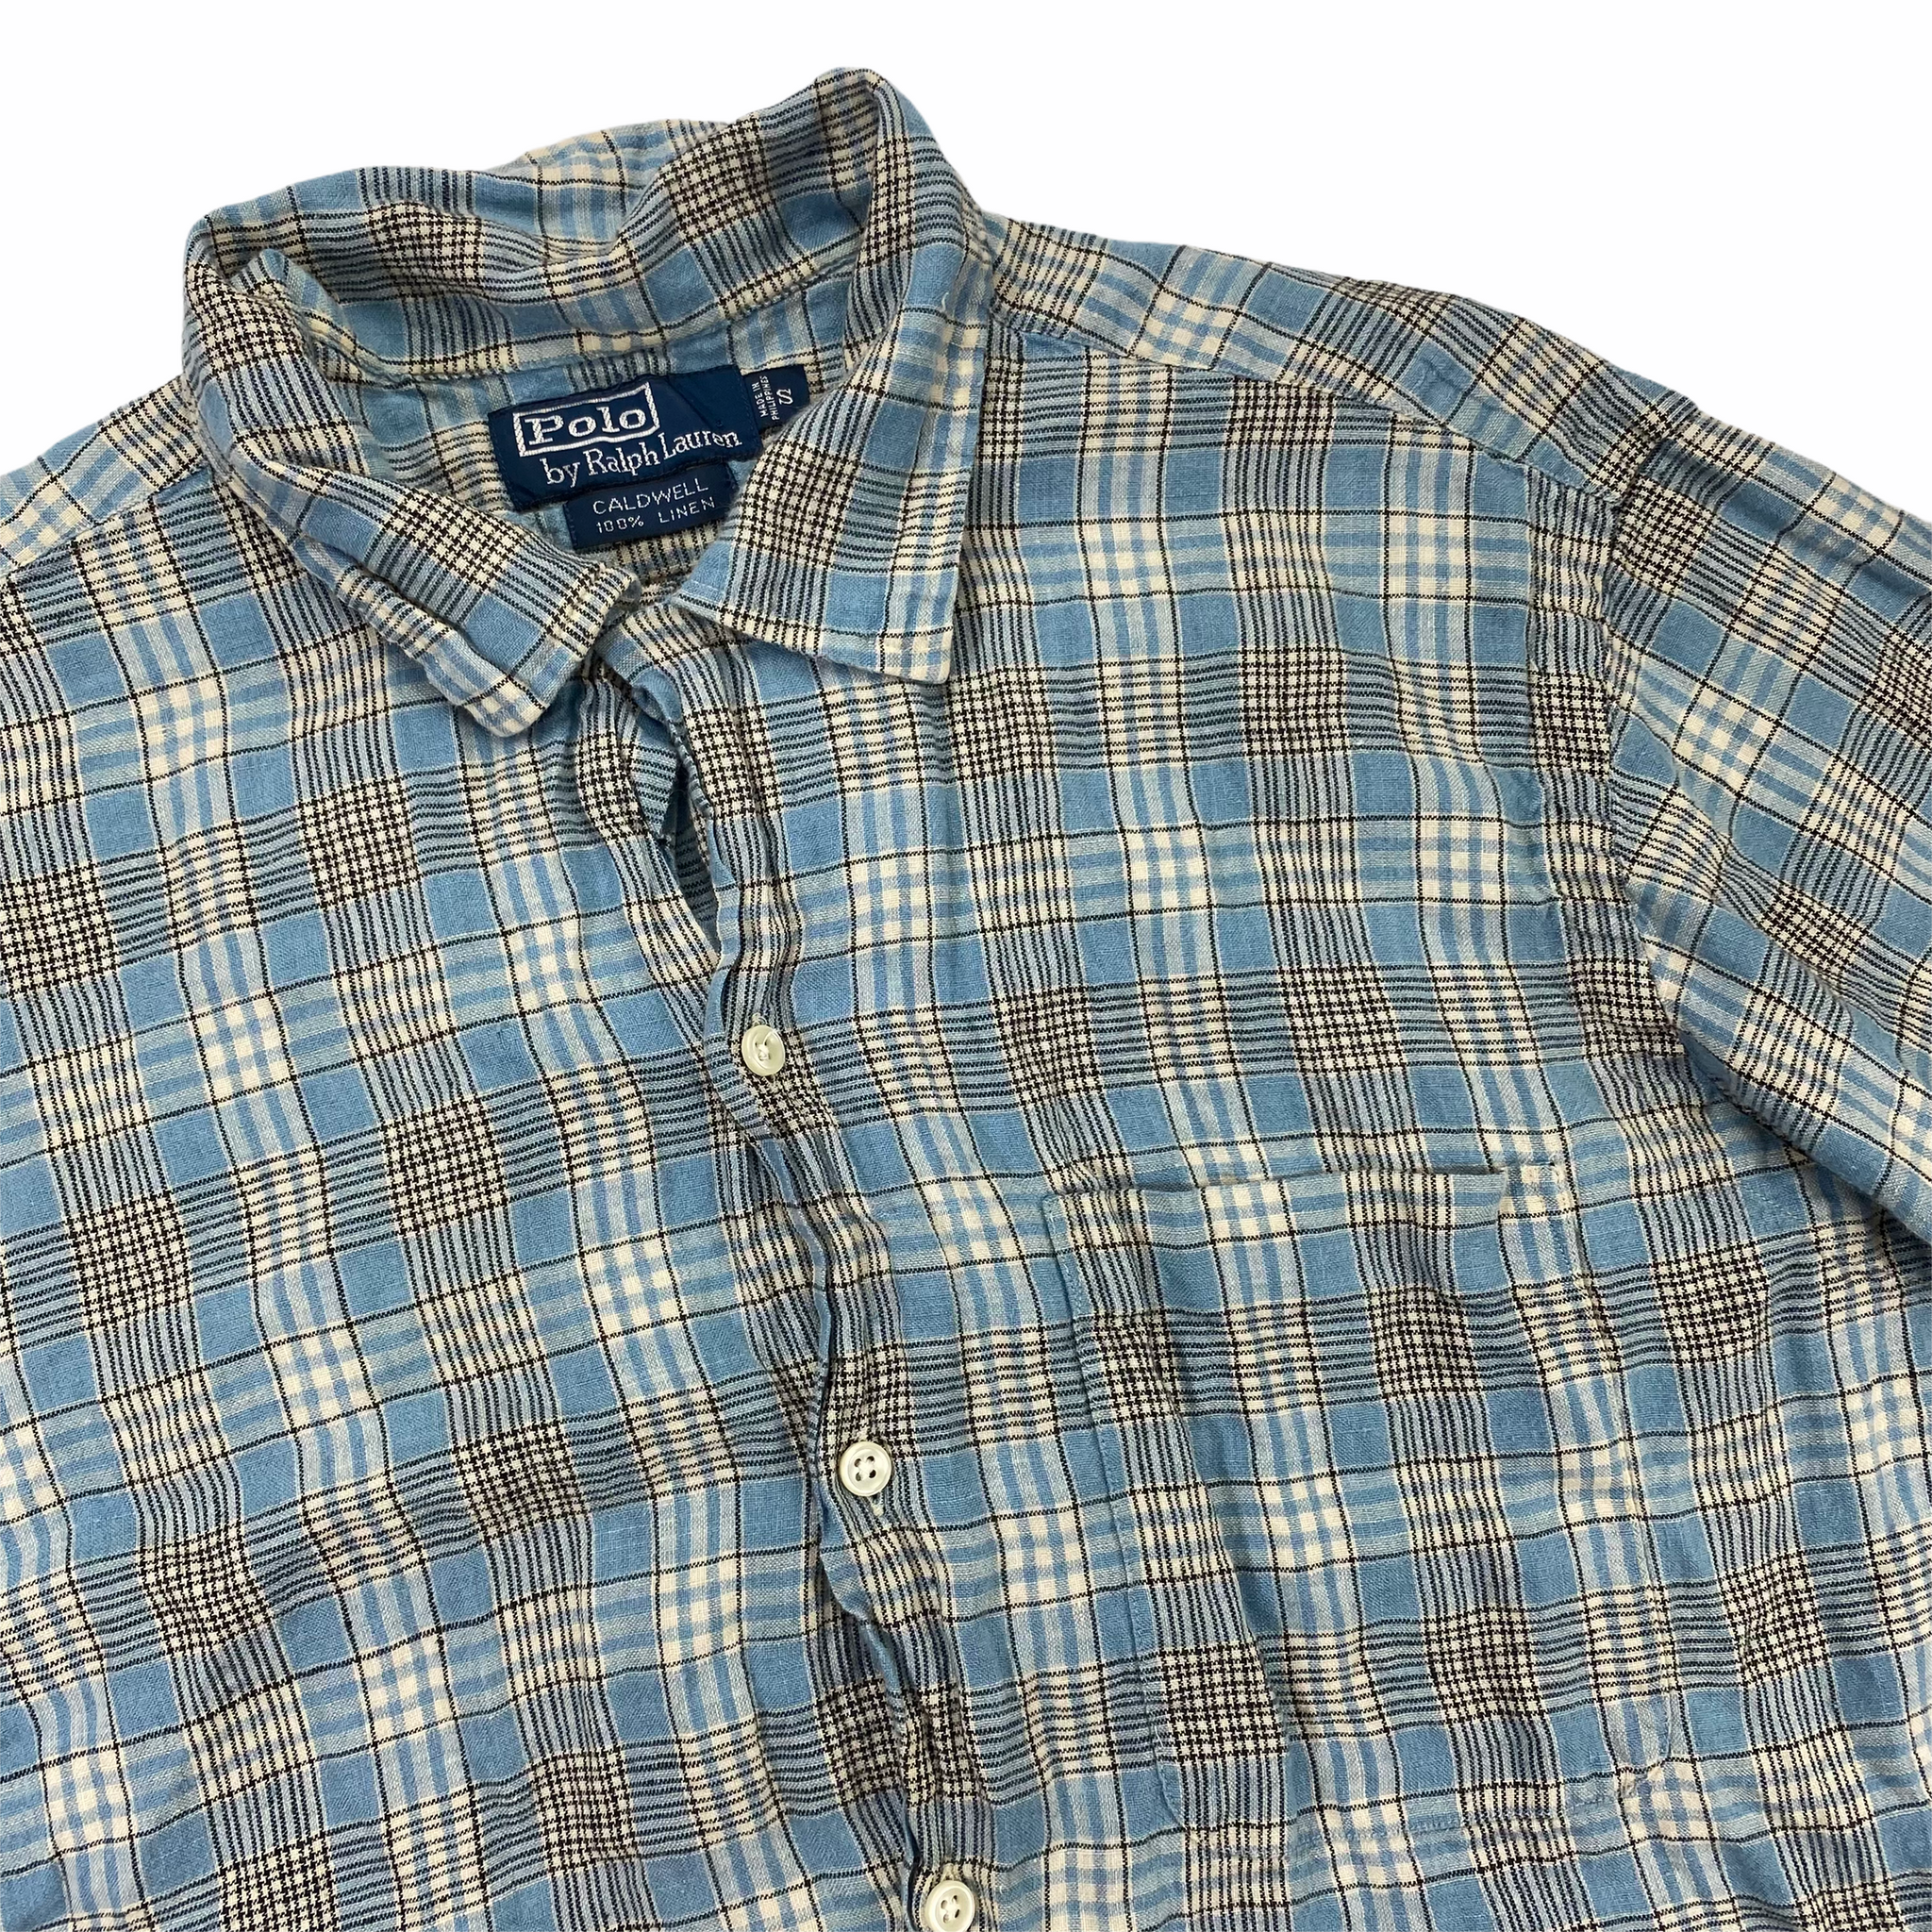 Polo ralph lauren caldwell linen button down shirt Small – Vintage